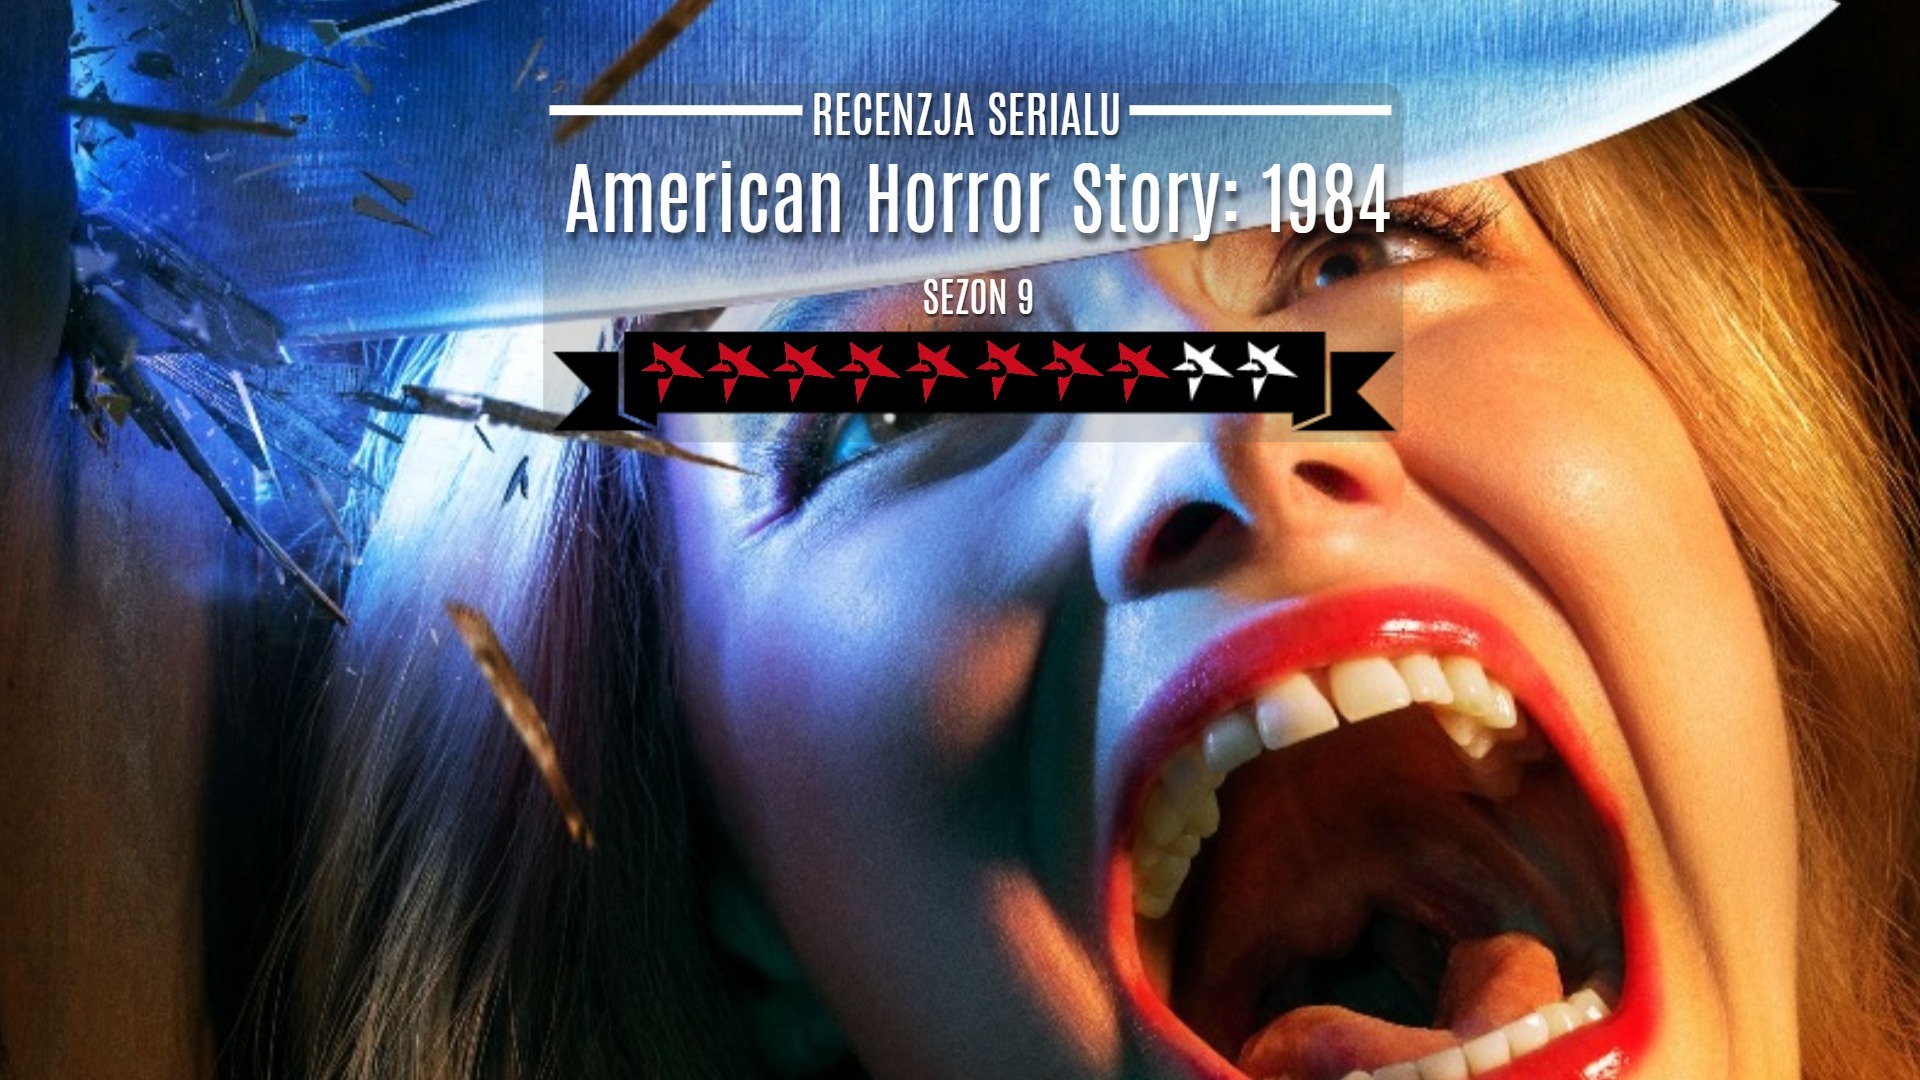 Recenzja serialu American Horror Story: 1984 (FX)